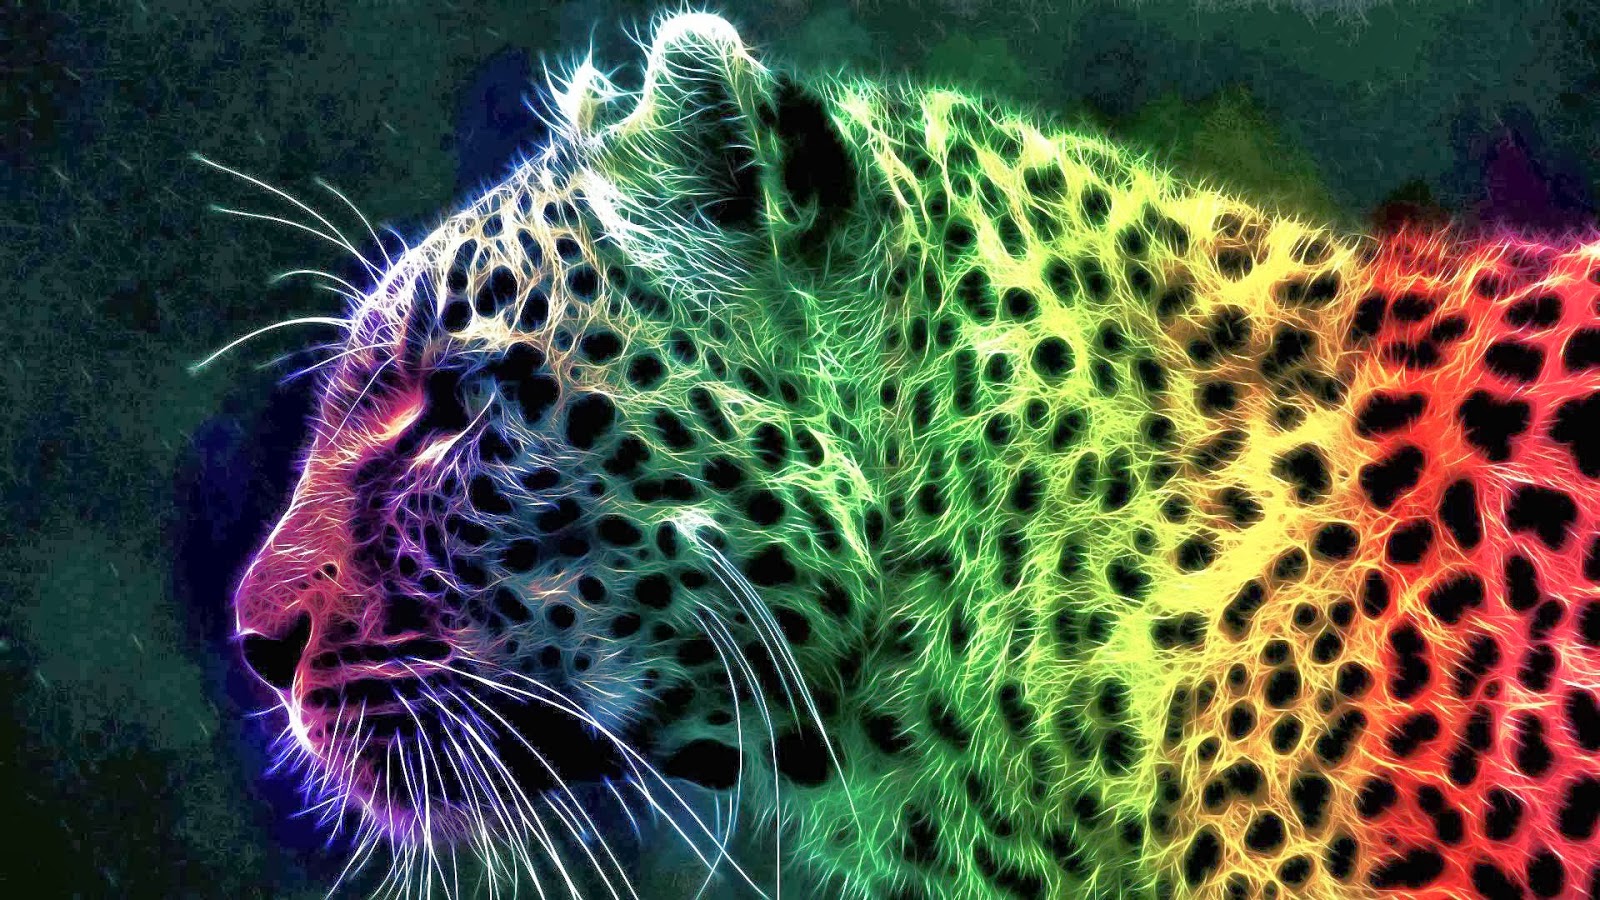 Free: Cool Cheetah: Rainbow Edition - Cheetah Photo (37634456) - Fanpop 